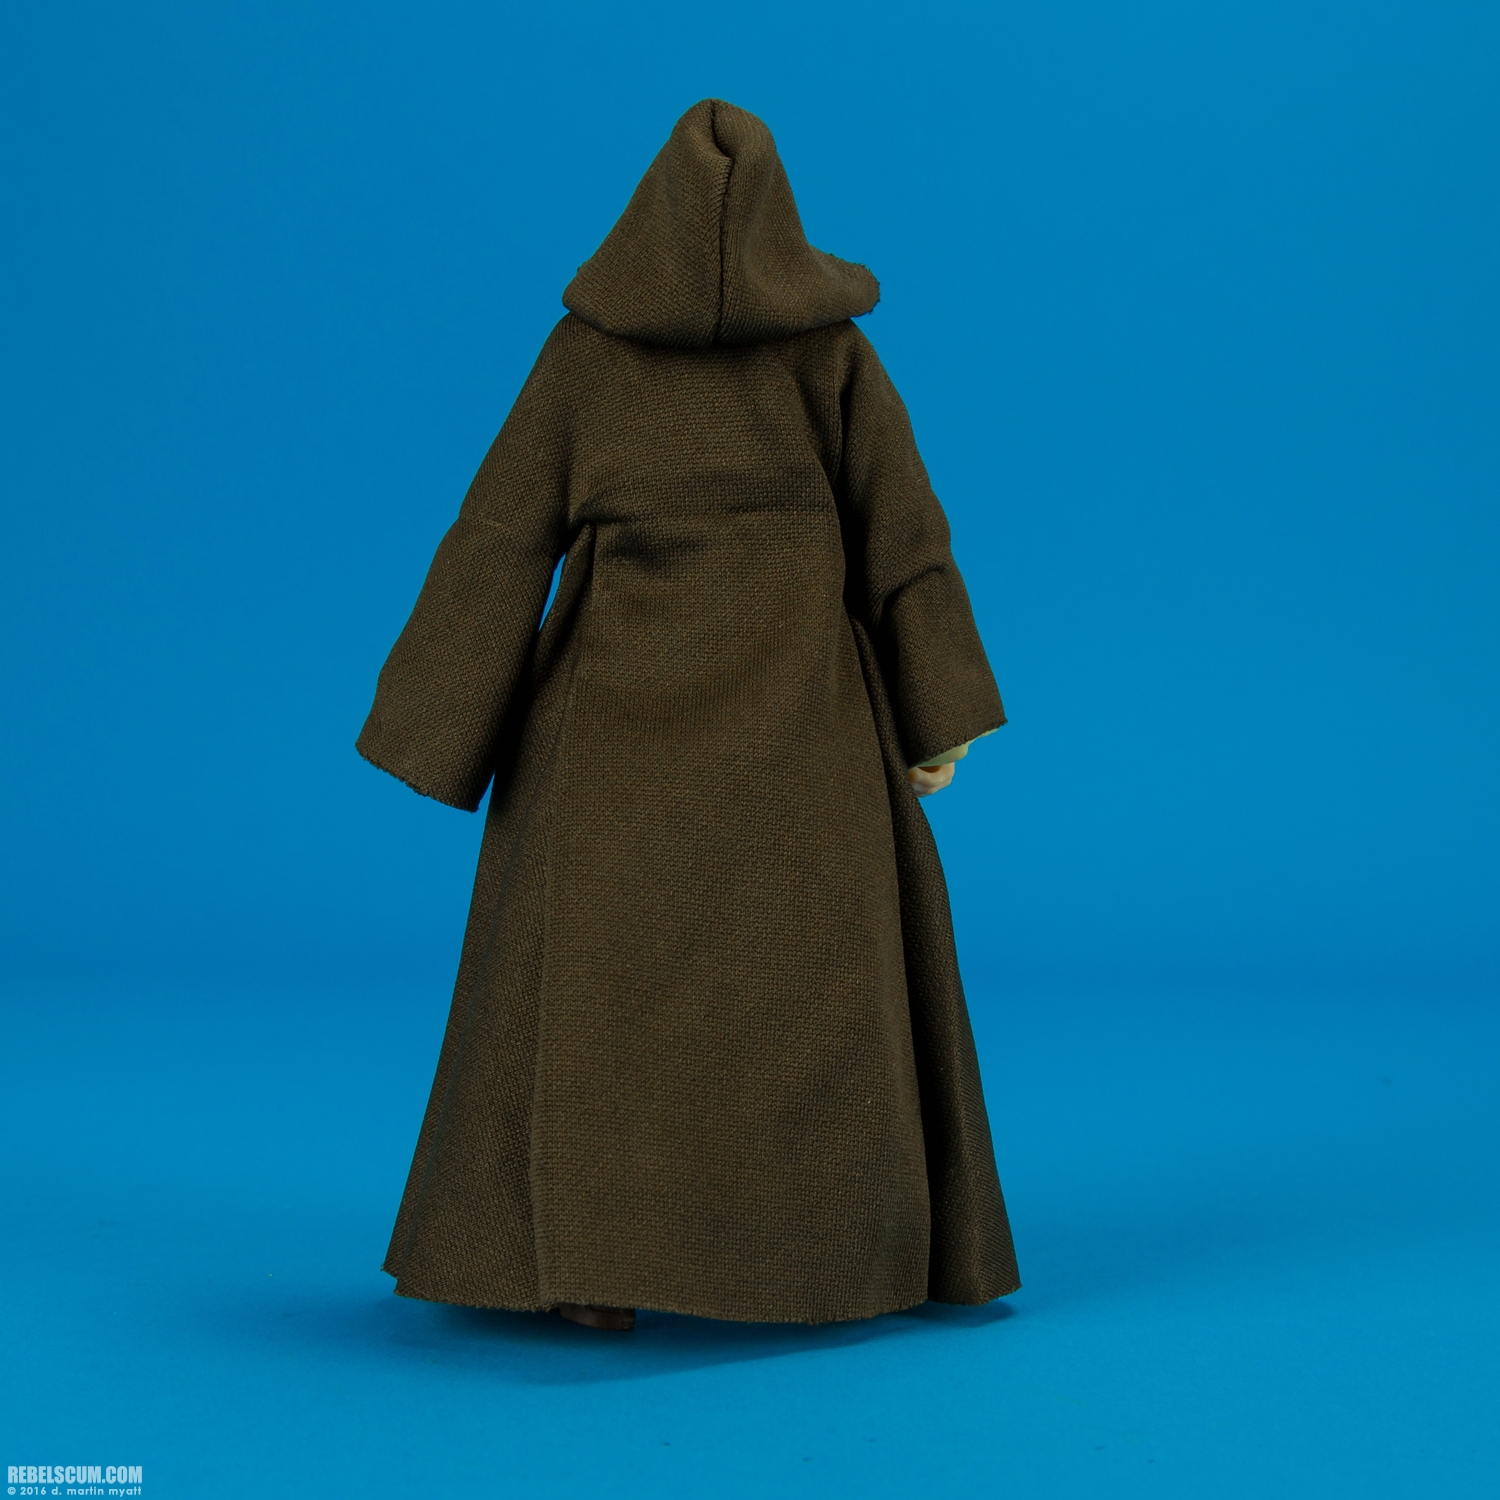 Obi-Wan-Kenobi-6-inch-The-Black-Series-2016-SDCC-008.jpg